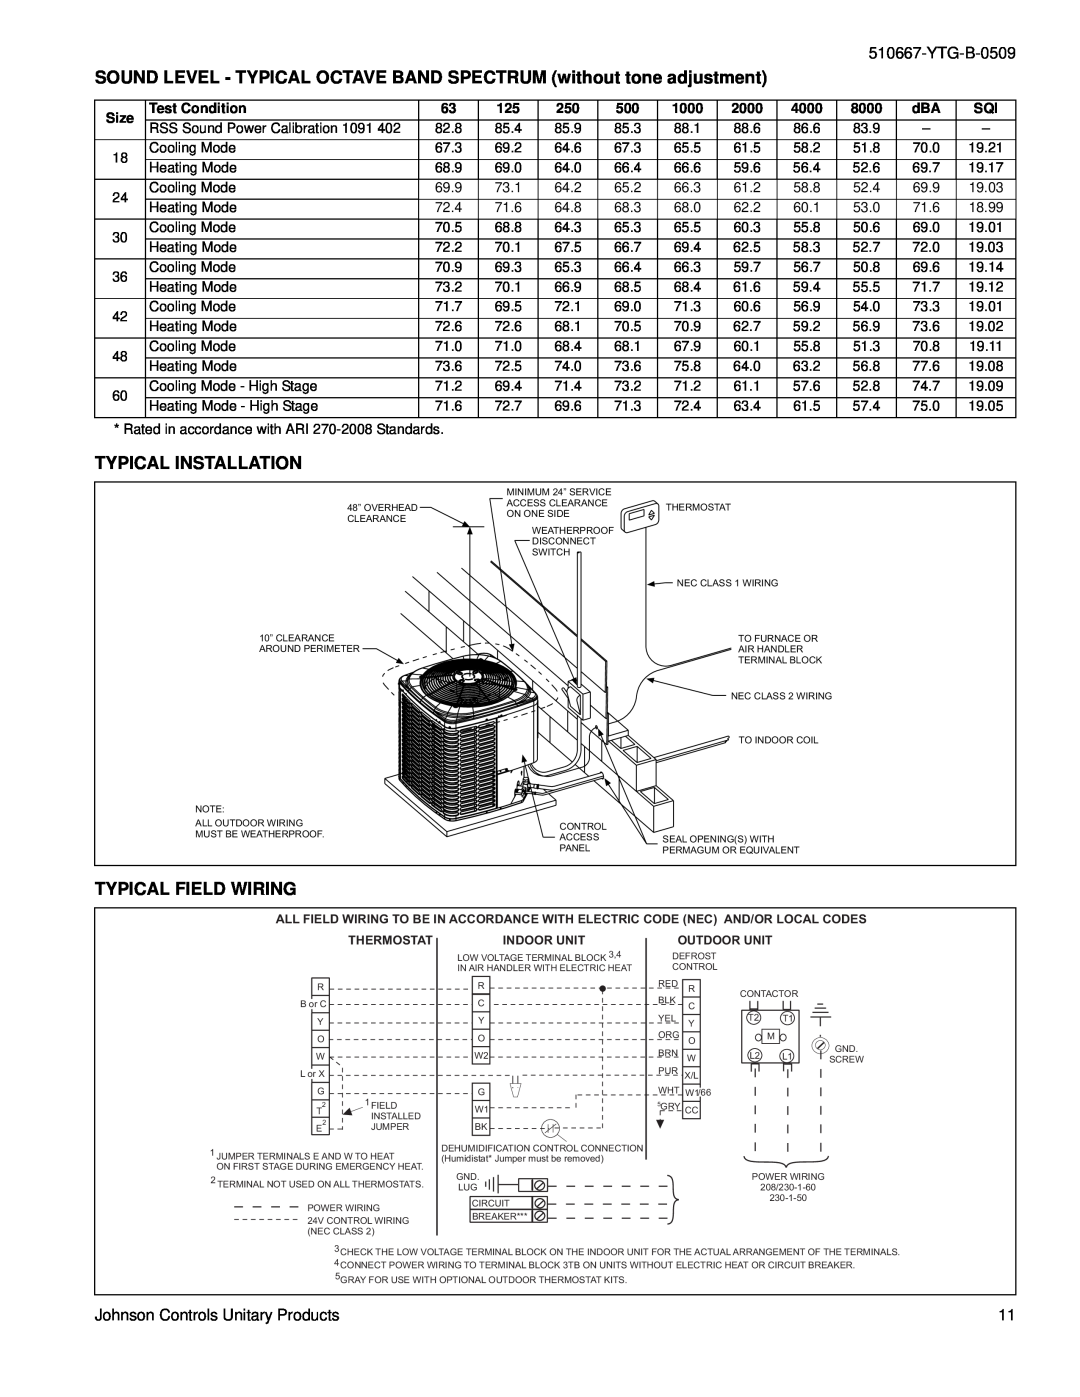 York YHJF18 THRU 60 warranty Typical Installation, Typical Field Wiring, YTG-B-0509, Johnson Controls Unitary Products 